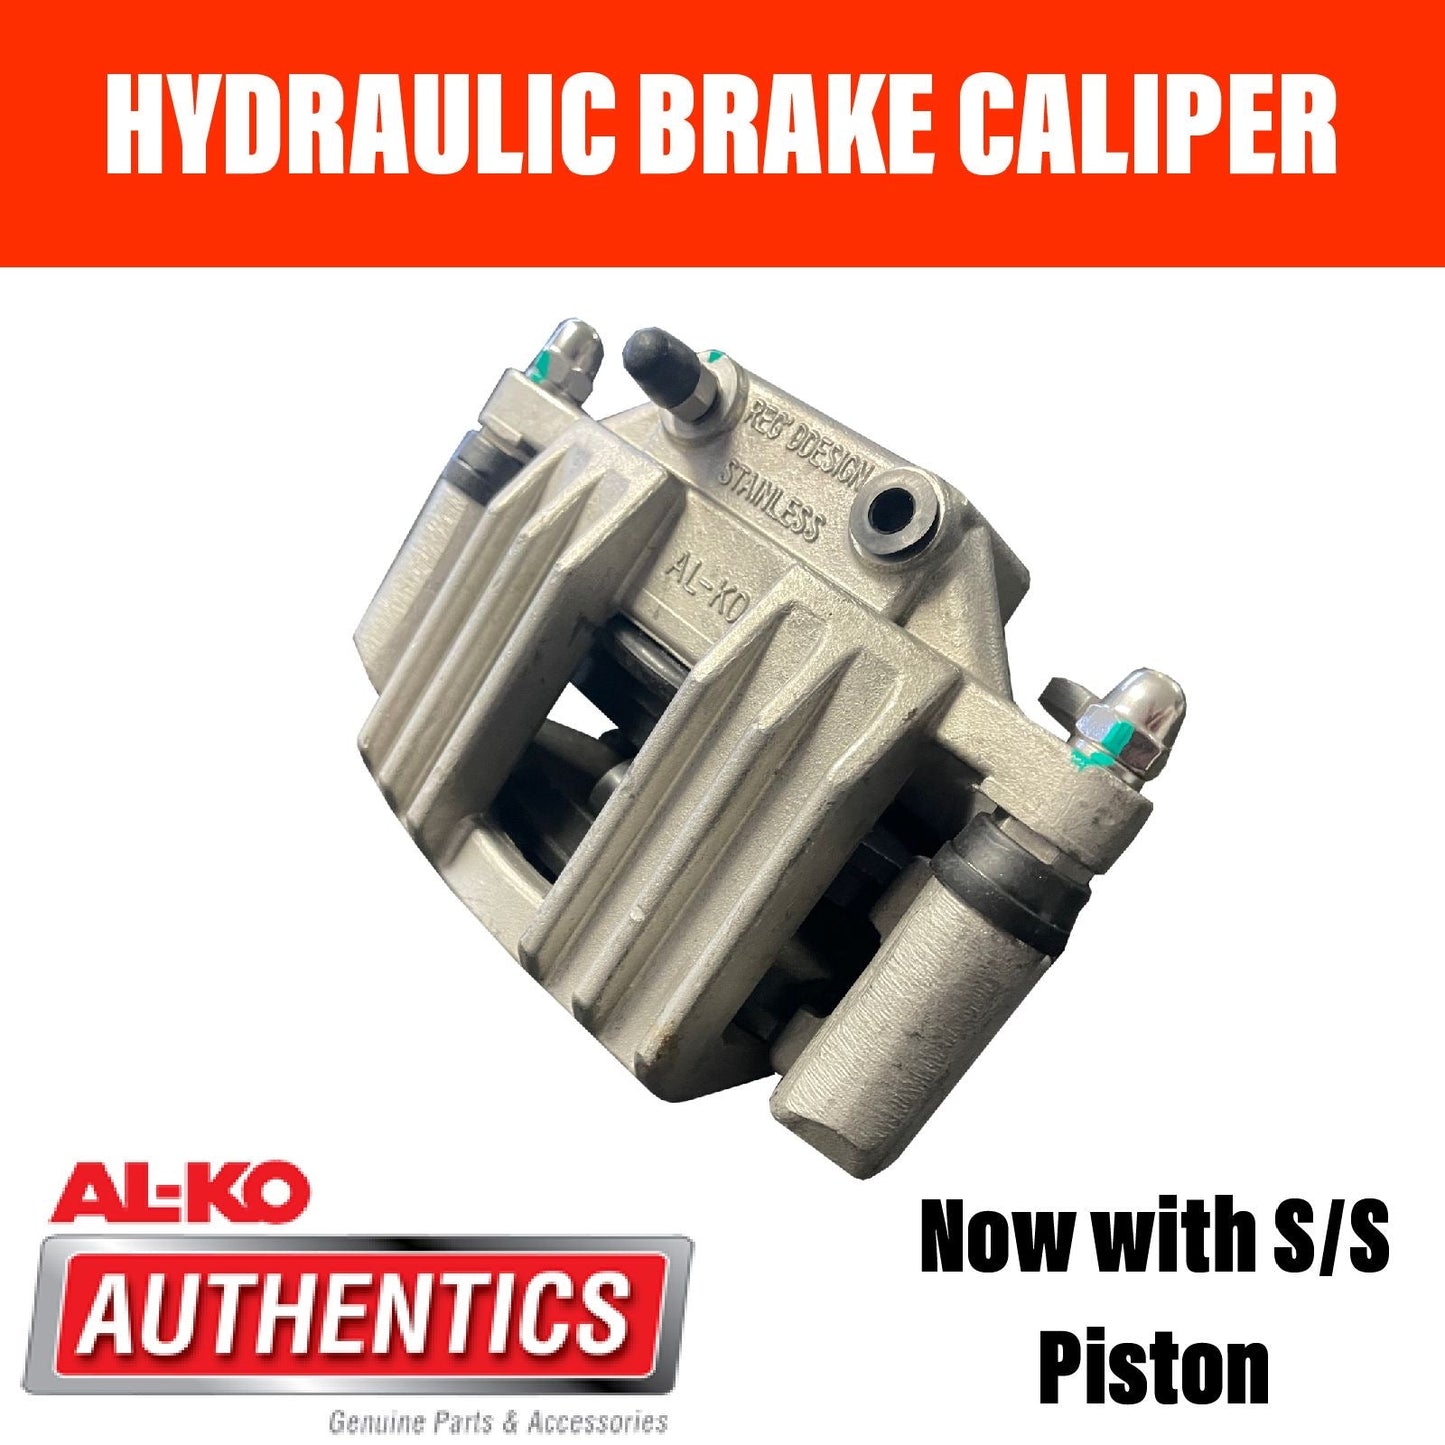 AL-KO STAINLESS STEEL Hydraulic Brake Calipers NEW S/S PISTON